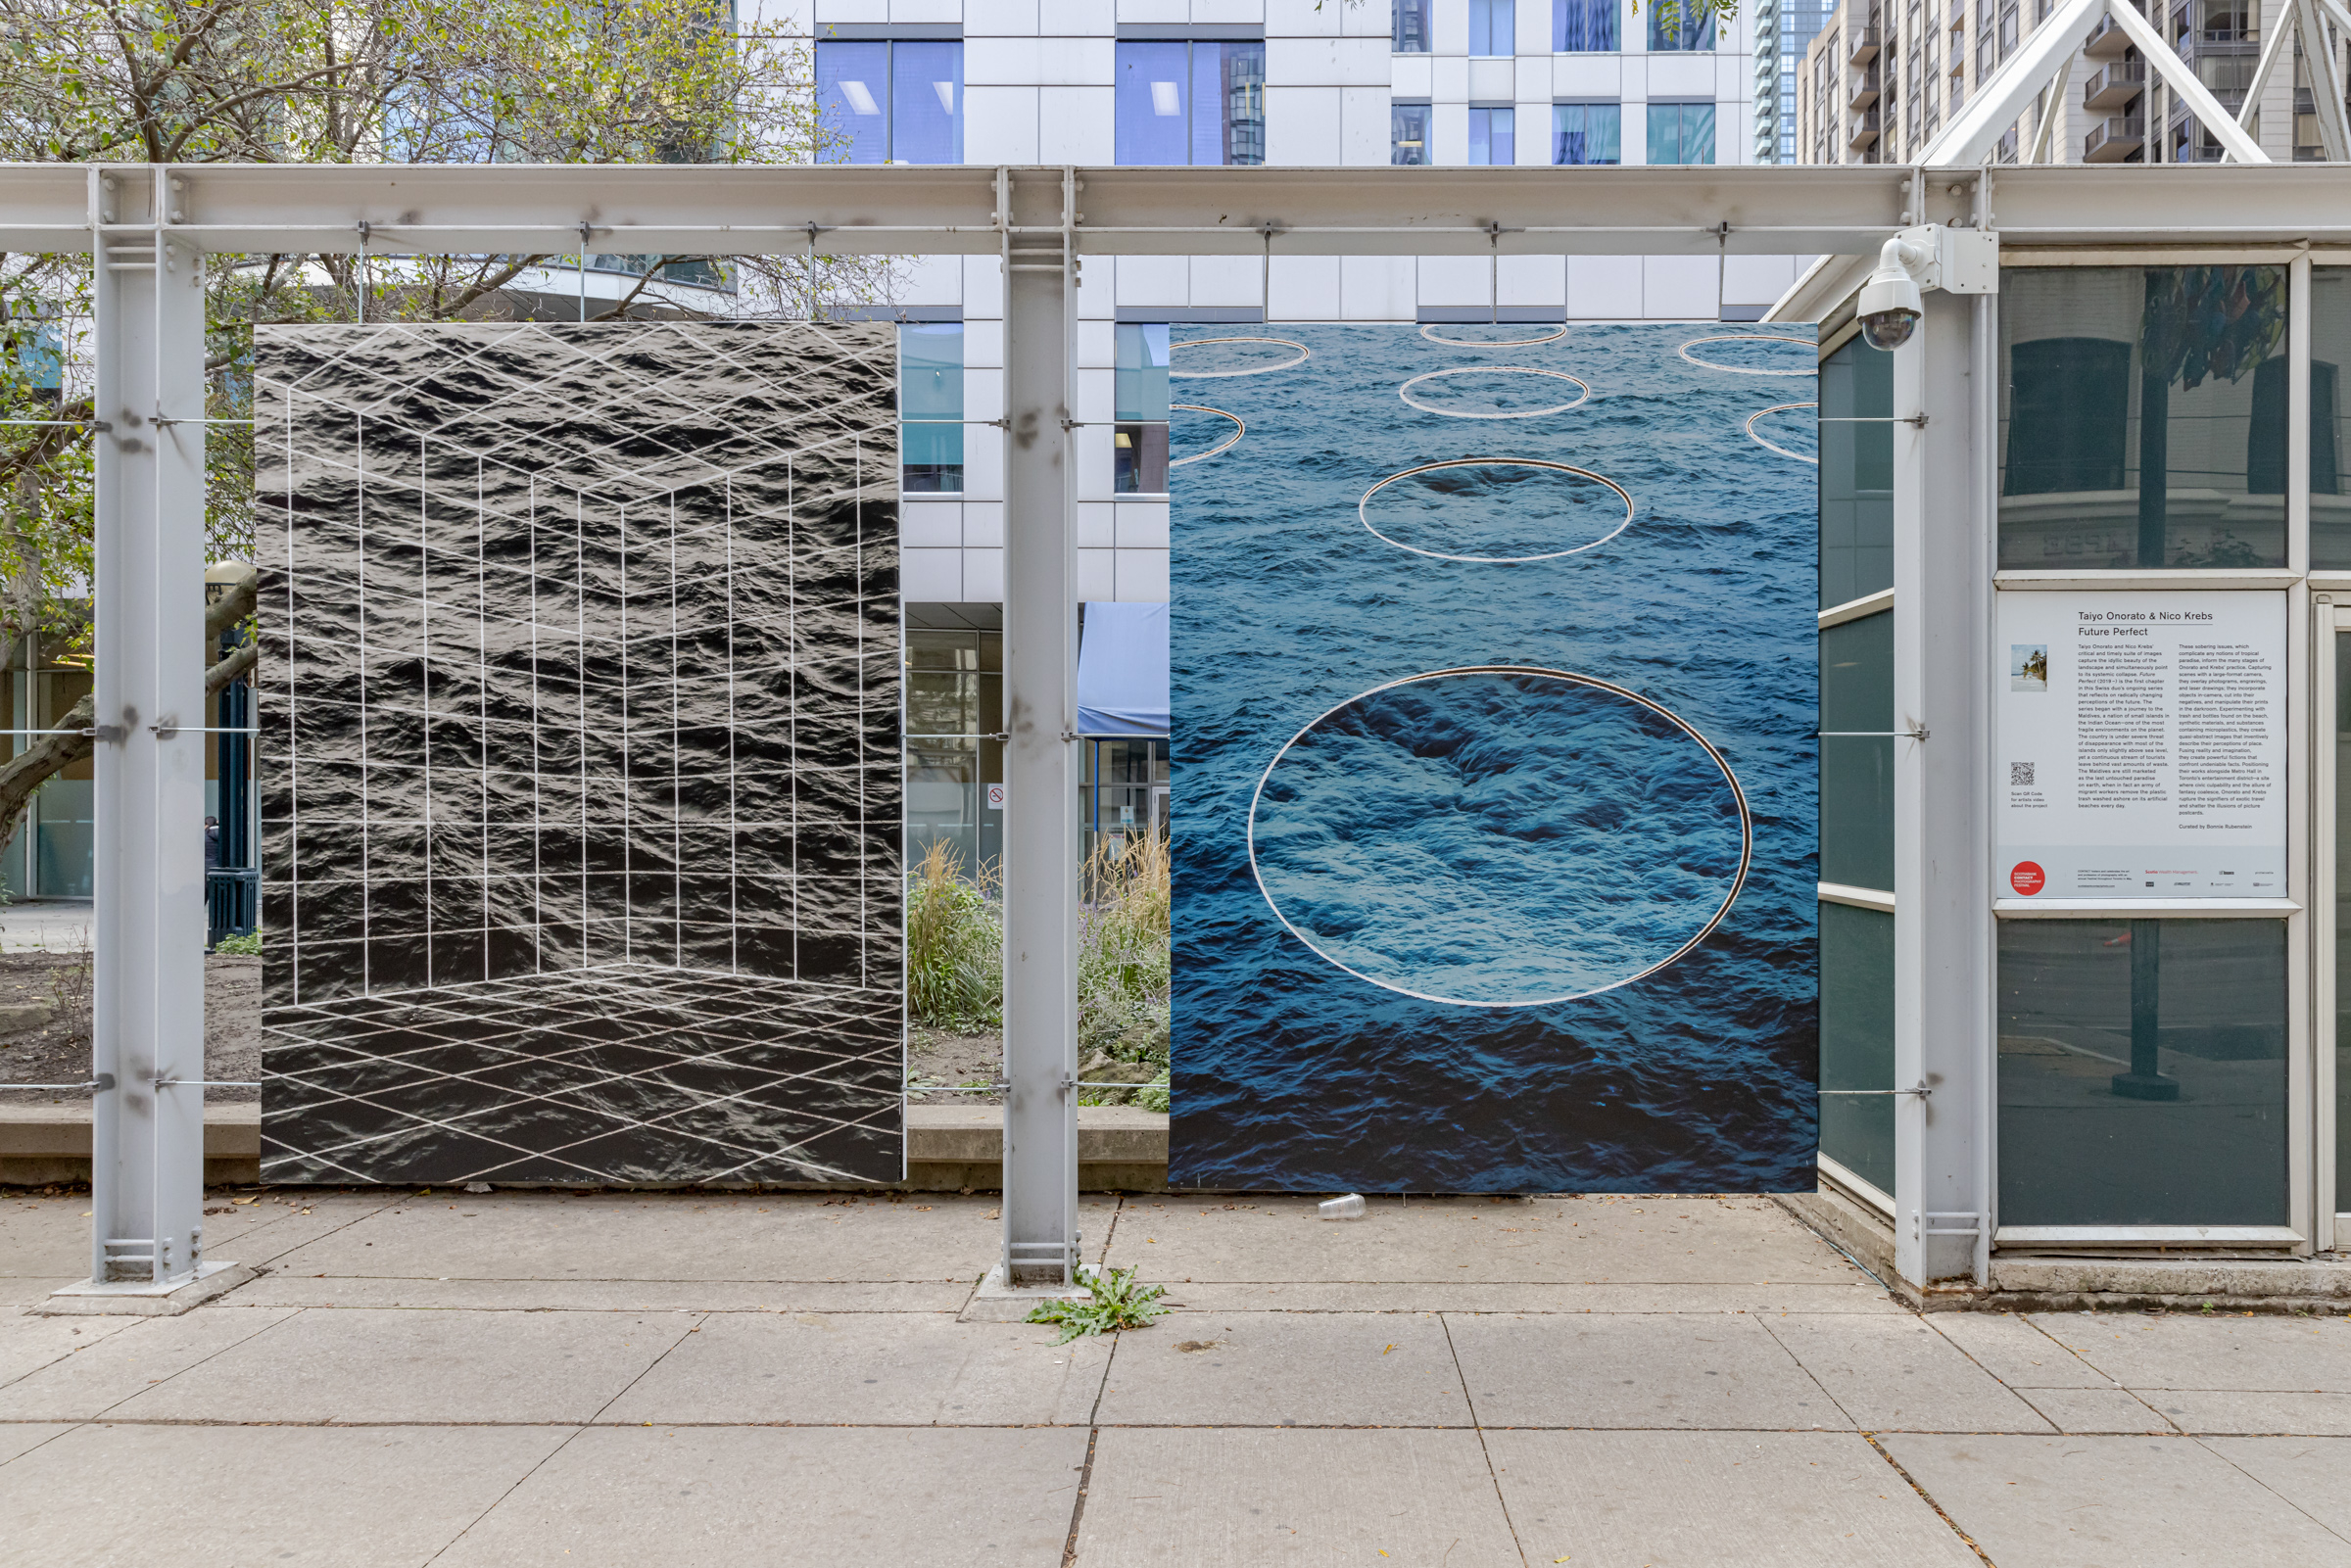     Taiyo Onorato & Nico Krebs, Future Perfect, installation at Metro Hall, along King St W at John St, Toronto, 2021. Courtesy of the artists, Sies+Hoeke, and CONTACT. Photo: Toni Hafkenscheid

